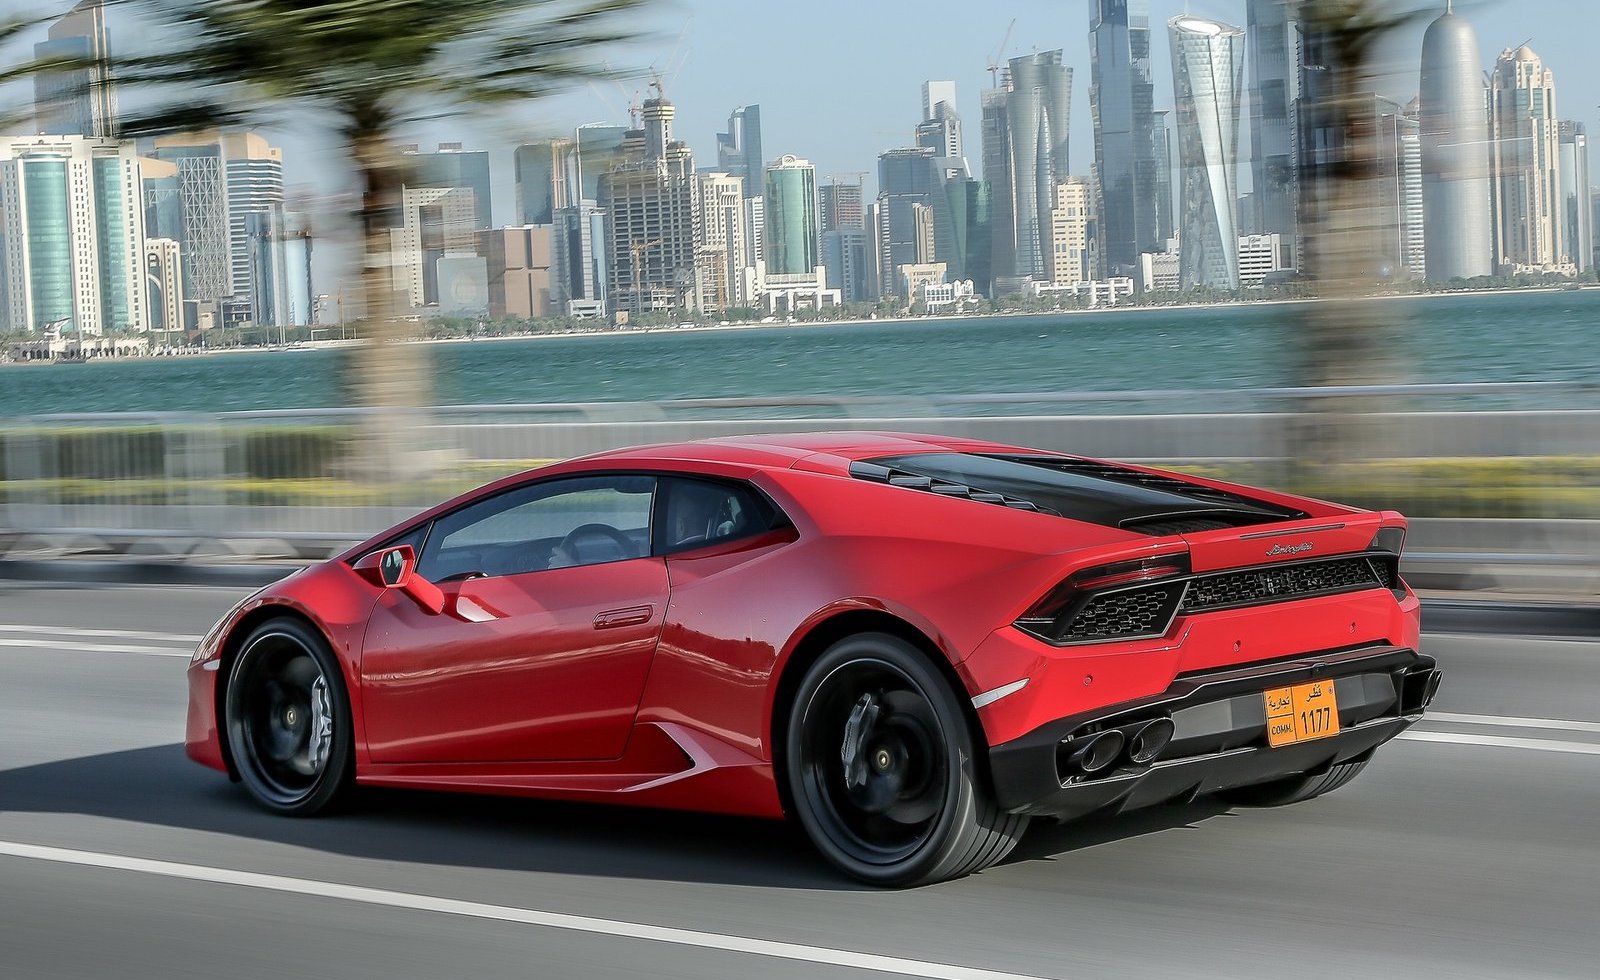 UK tourist in Dubai racks up $64k in speeding fines in Lamborghini